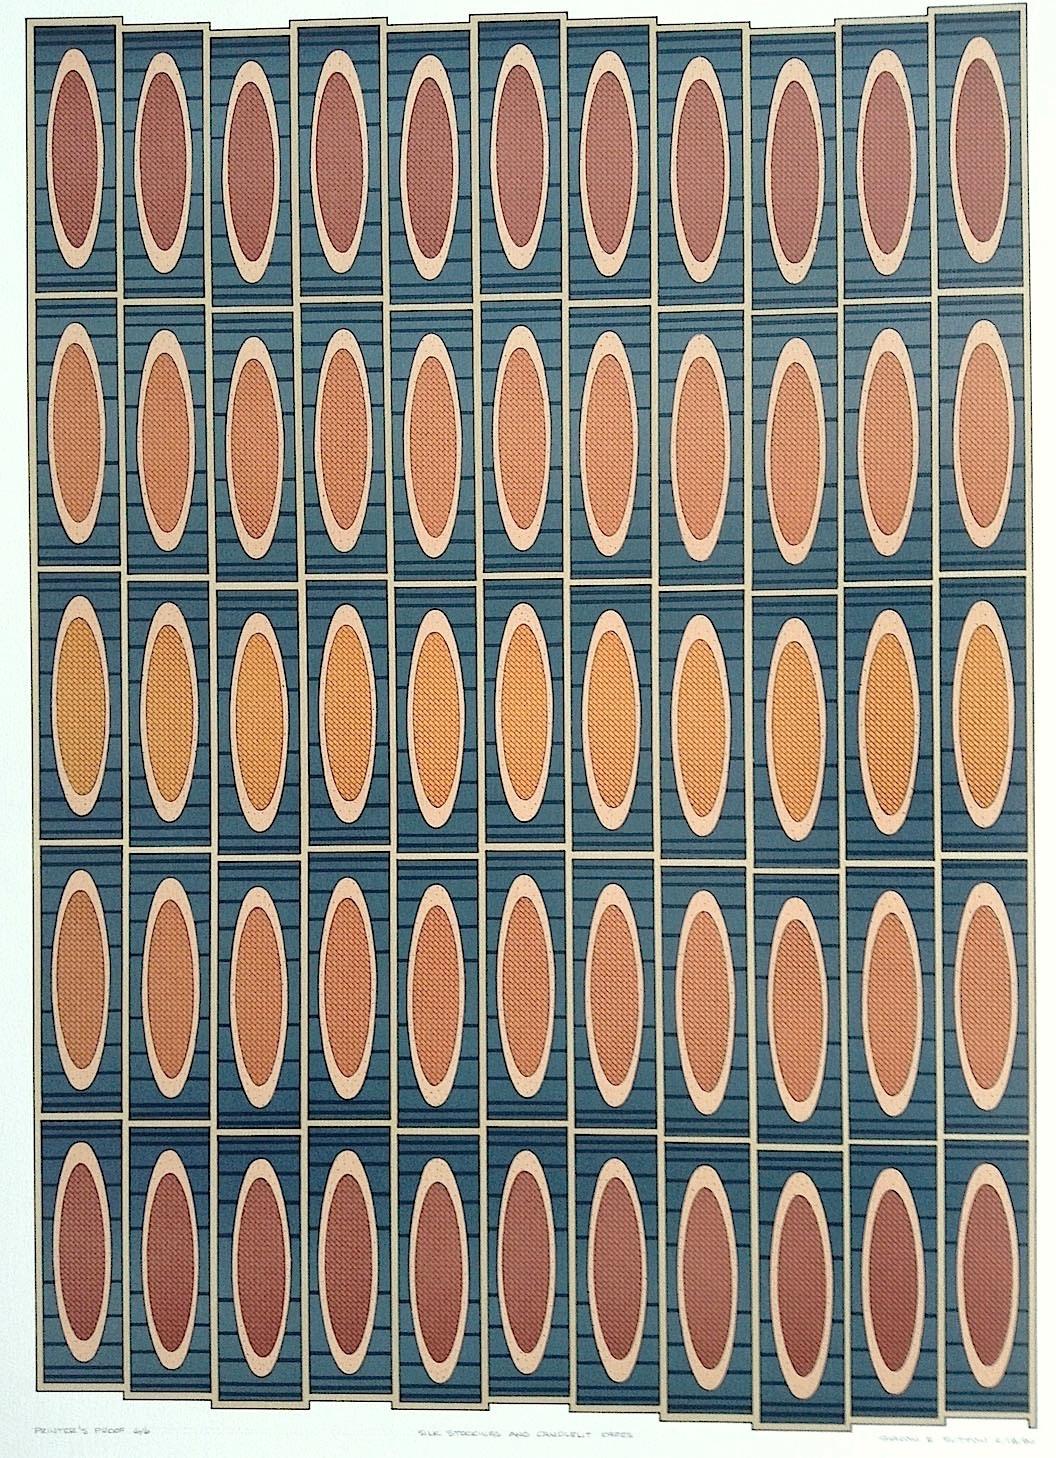 SILK STOCKINGS, CANDLELIT CAFES Signierte Lithographie, Geometrisches abstraktes Muster  – Print von Sharon Sutton